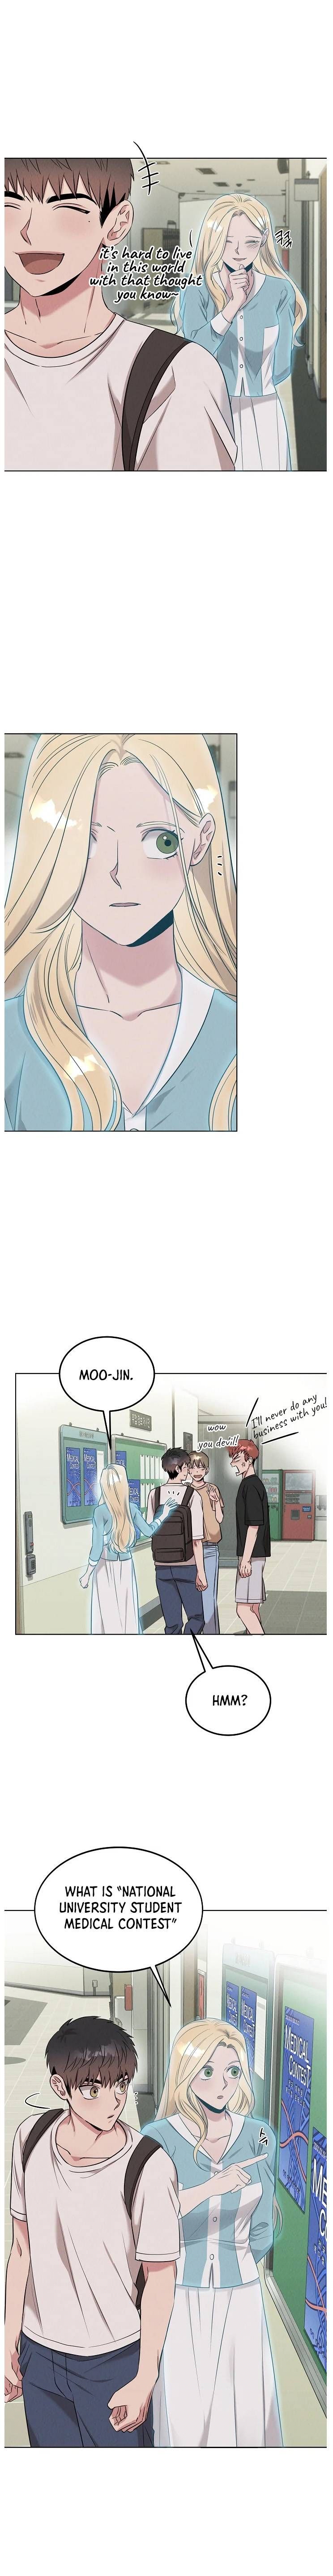 Genius Doctor Lee Moo-jin Chapter 53 page 5